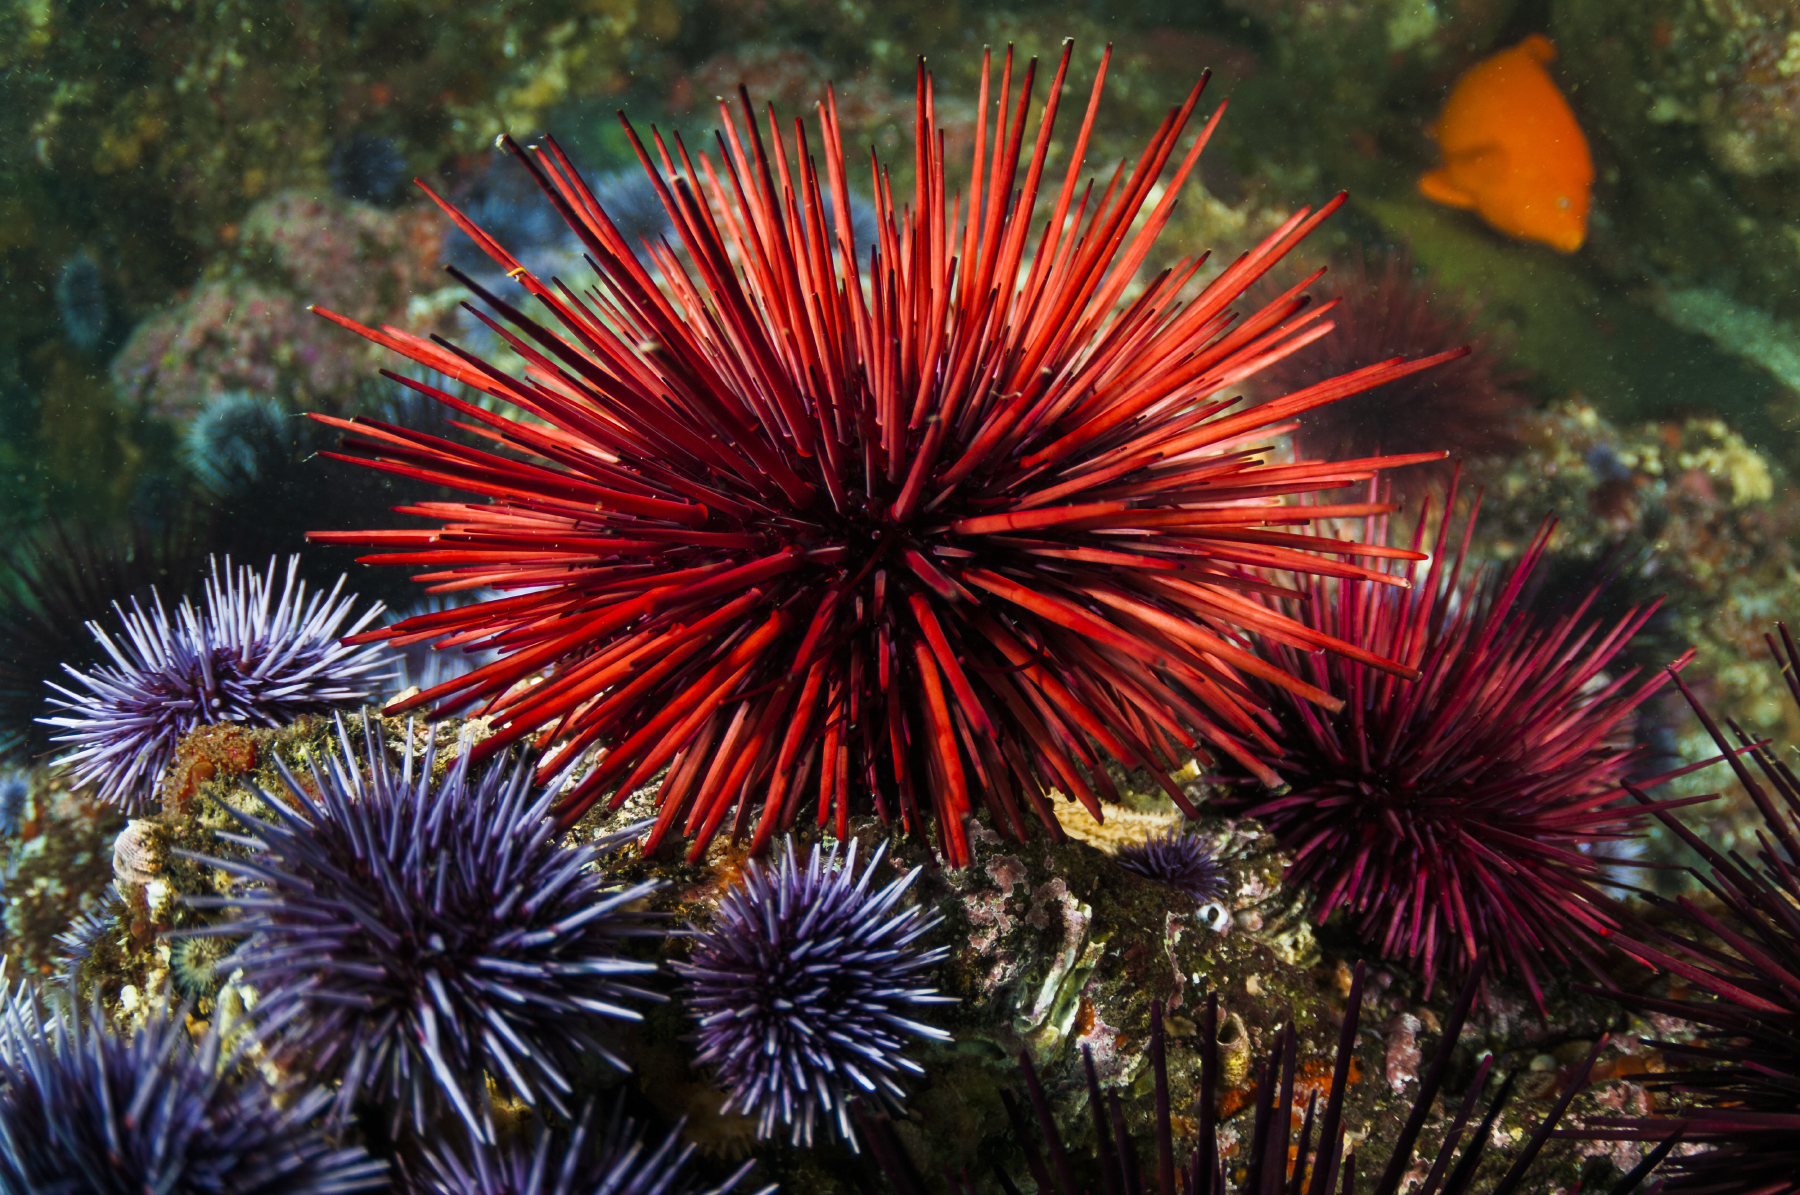 Sea urchins photo